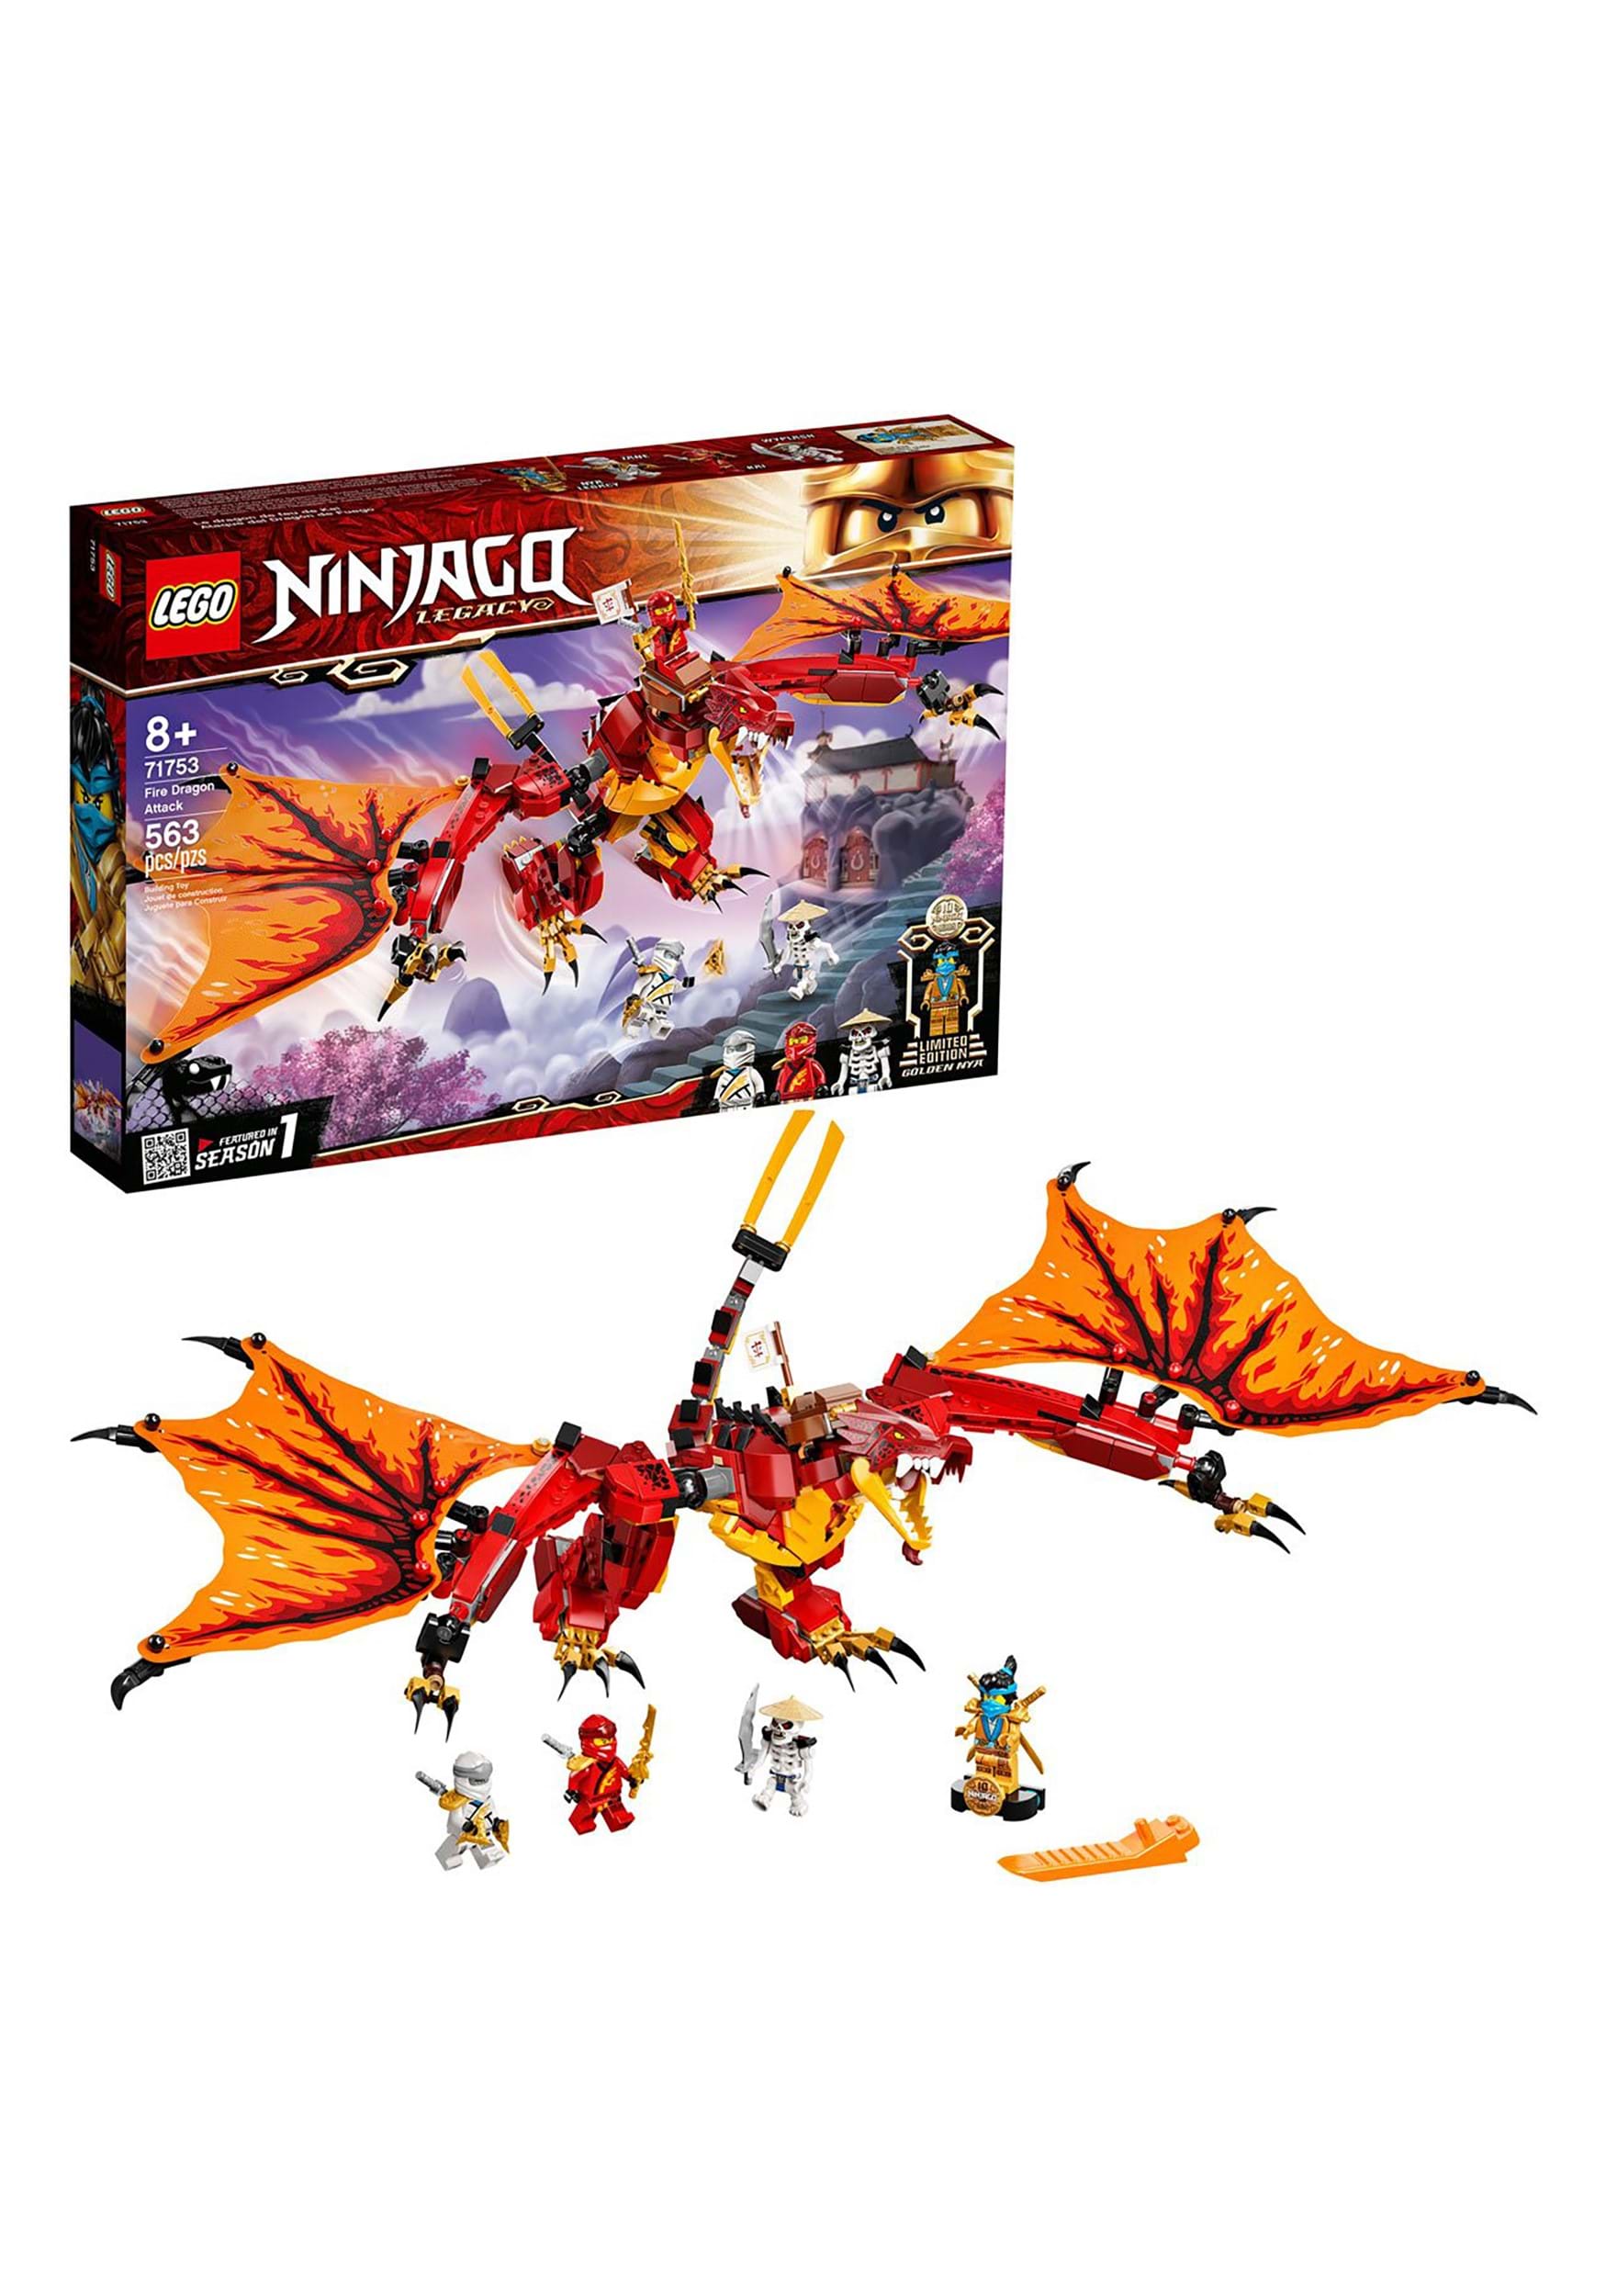 Ninjago Fire Dragon Attack from LEGO